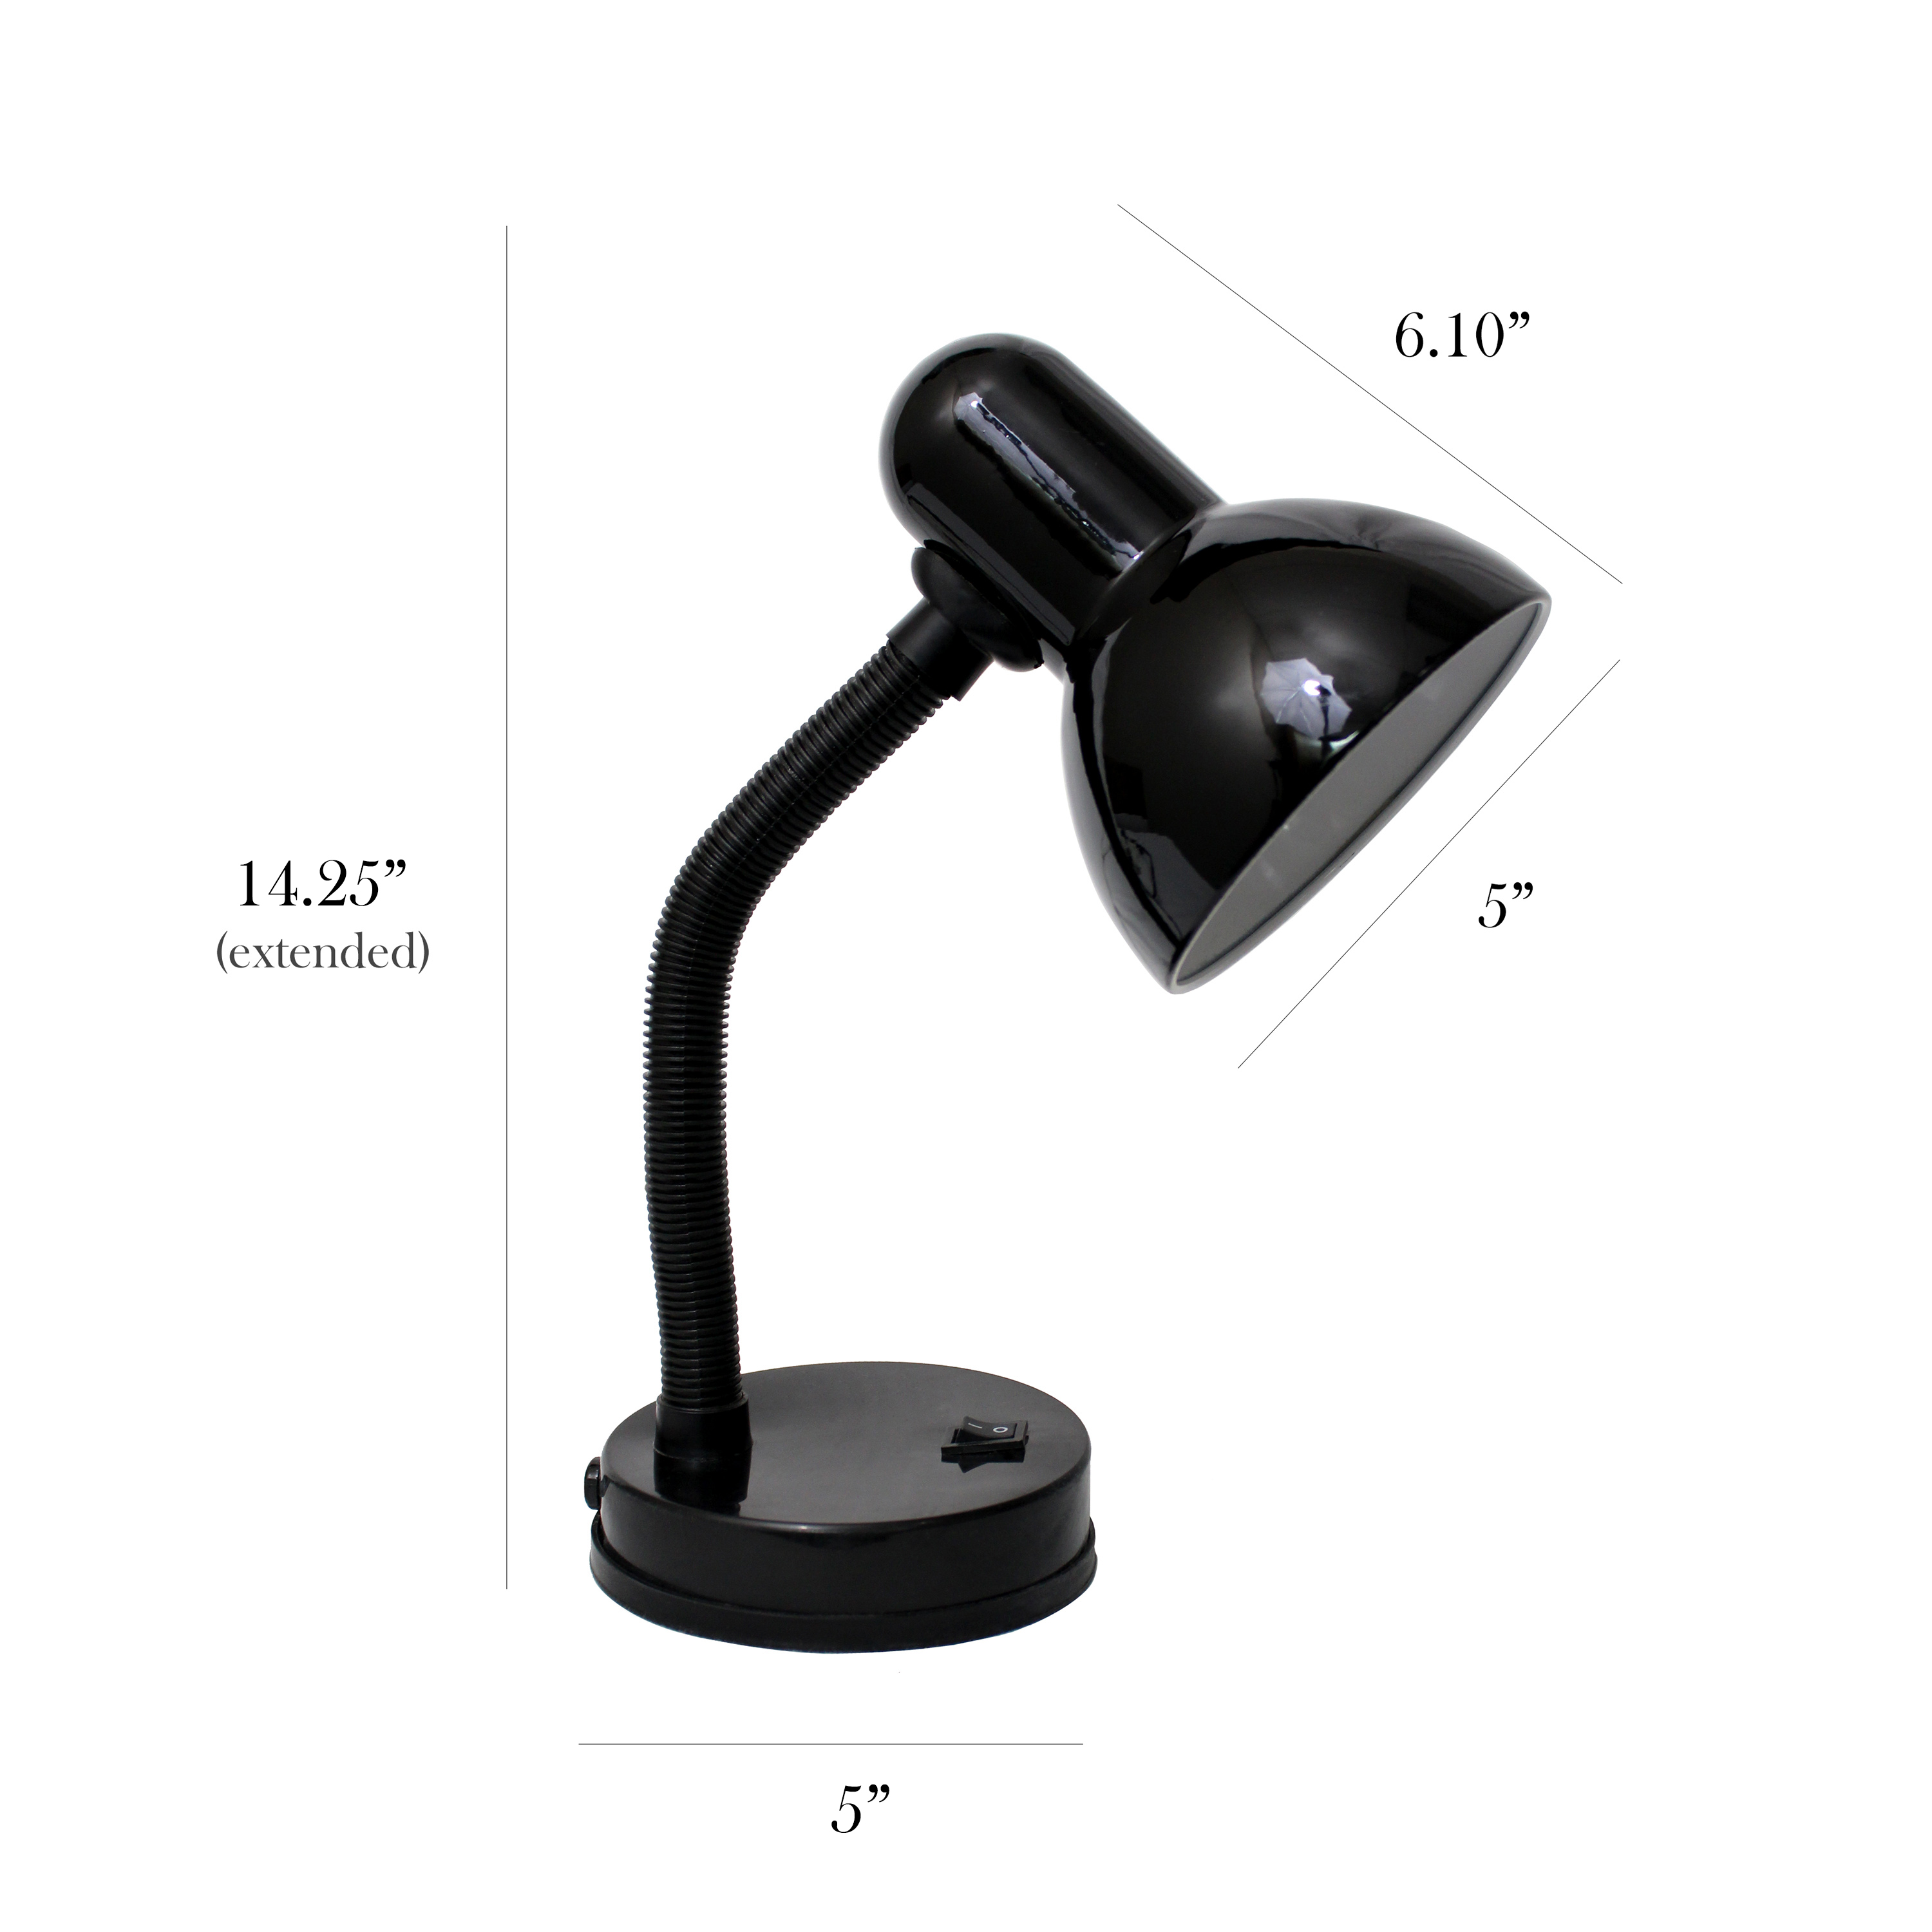 Simple Designs 14.25" Basic Metal Desk Lamp with Flexible Hose Neck, Black - image 4 of 13